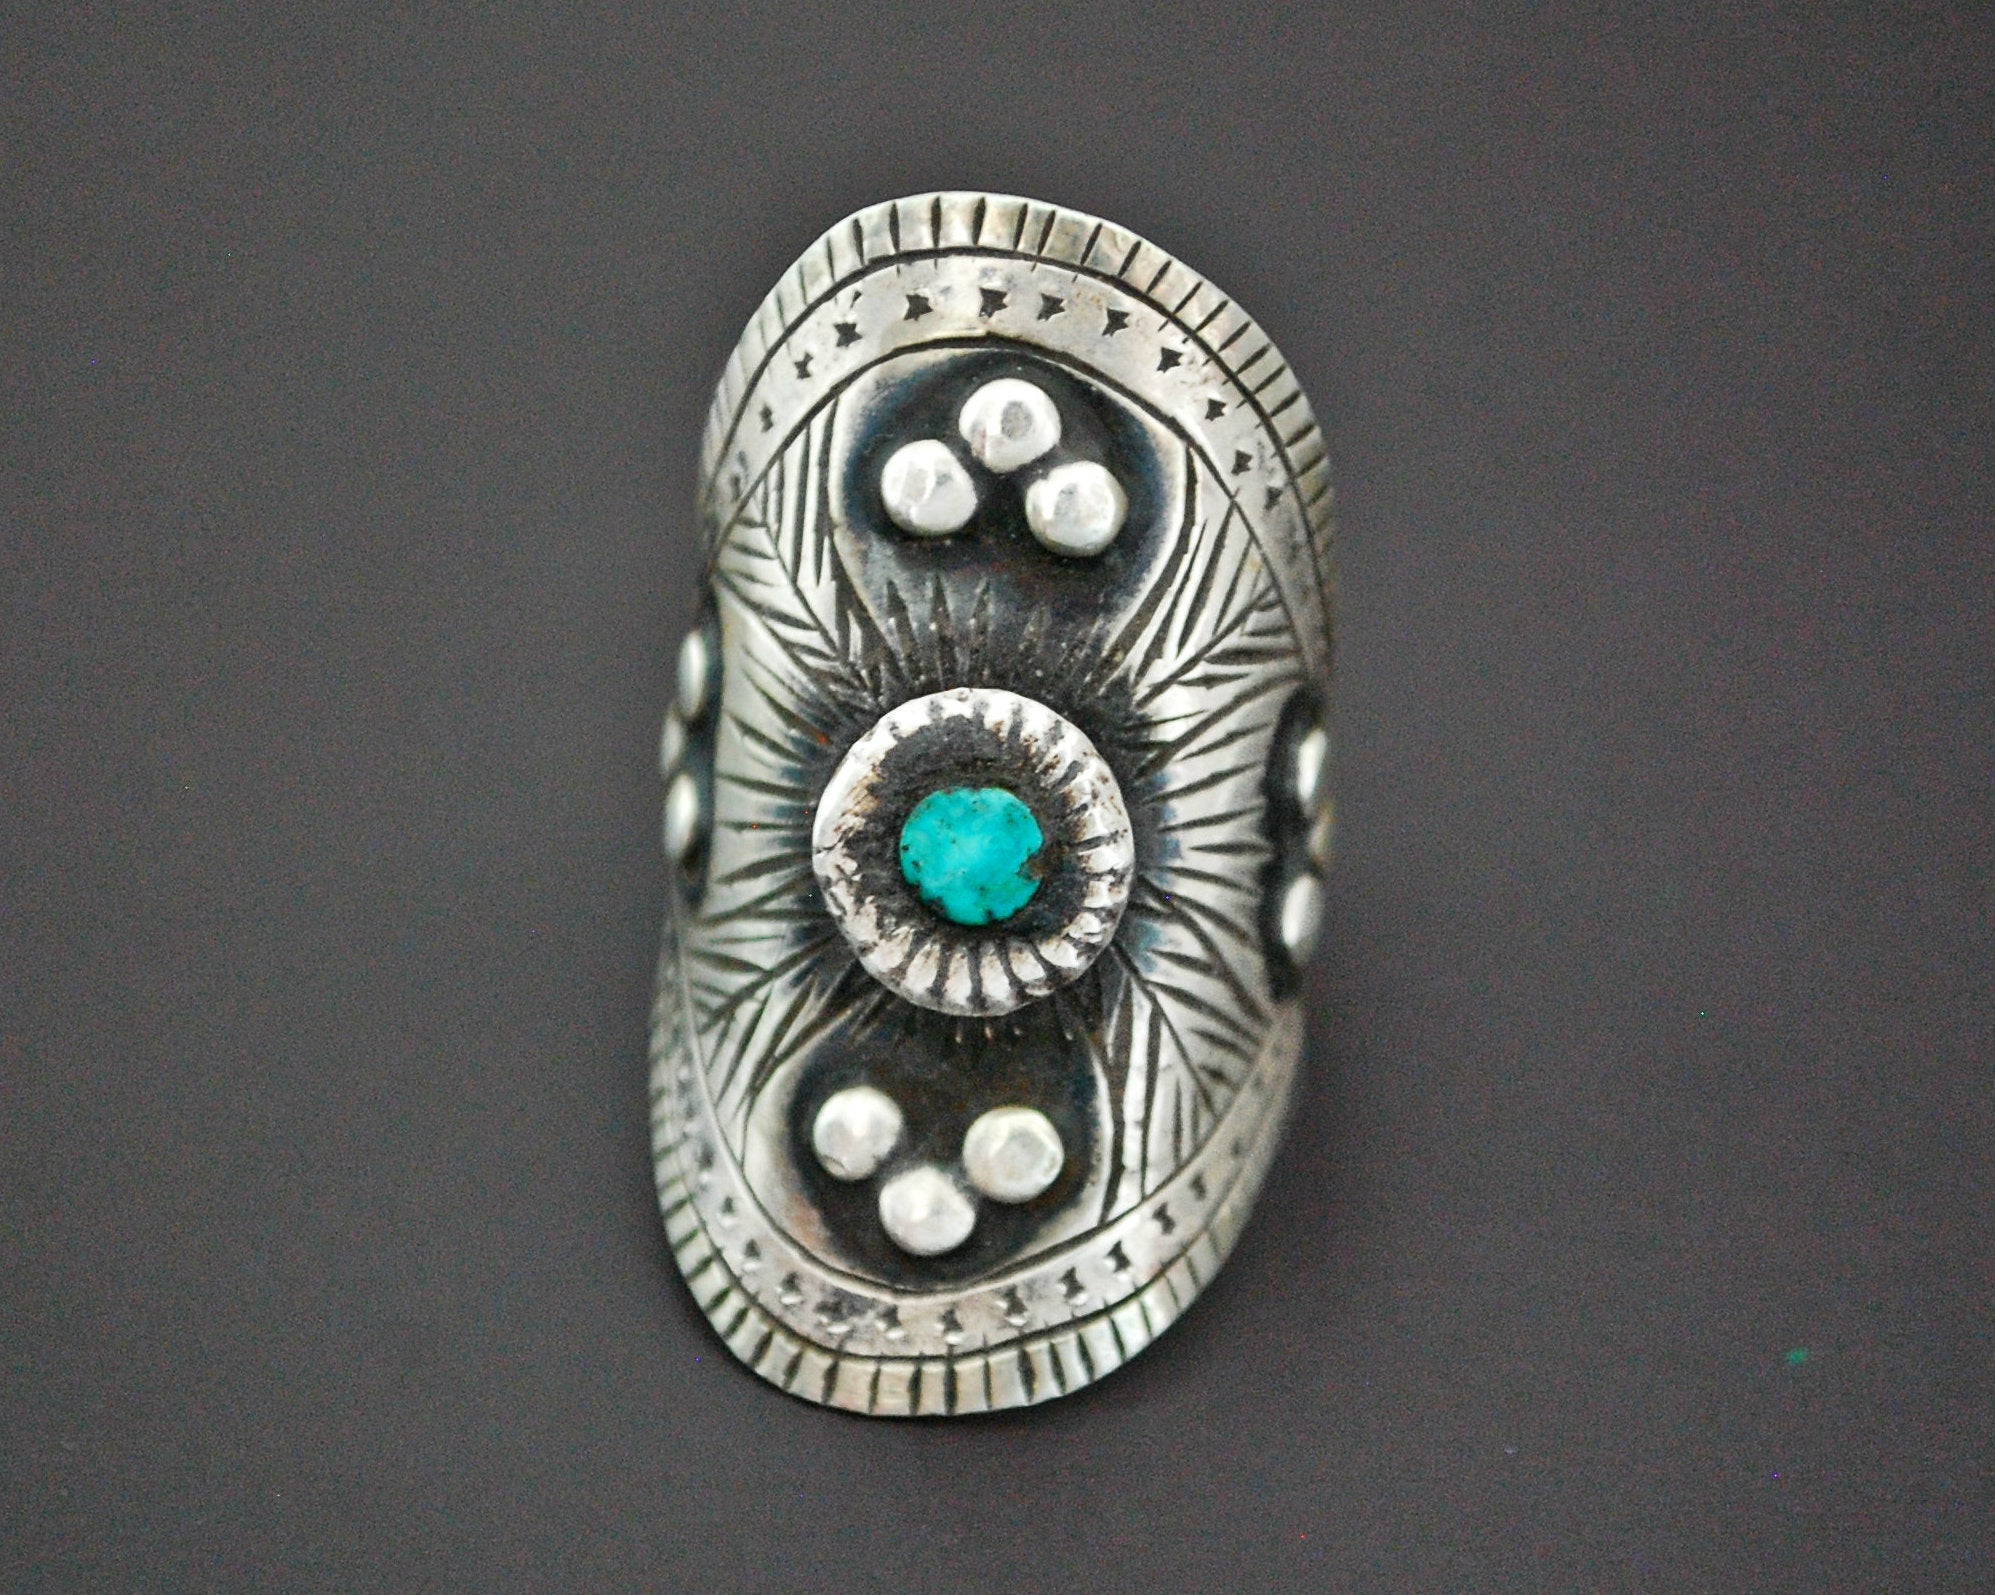 Ethnic Turquoise Ring - Size 8 Adjustable